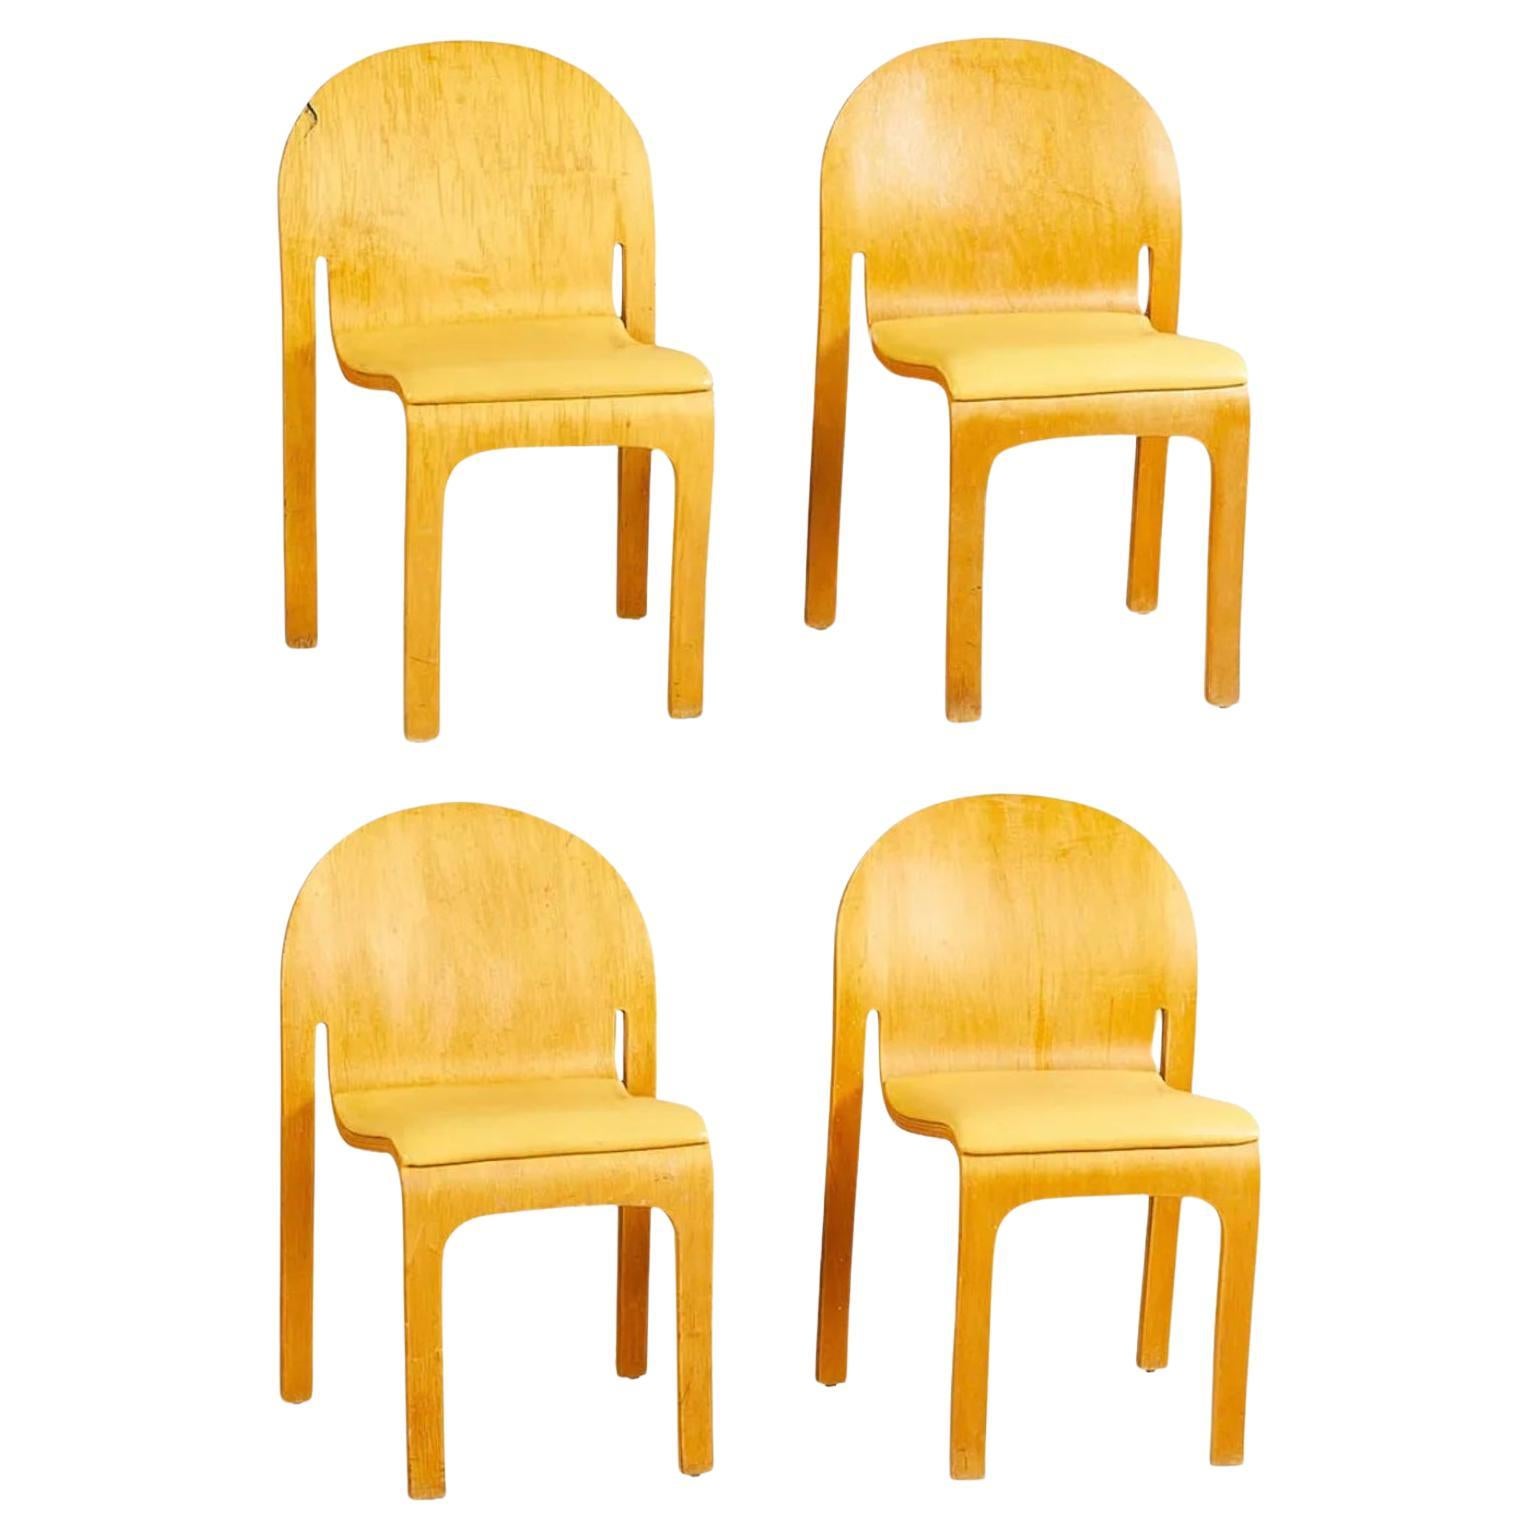 4 Peter Danko Design Mid Century Modern Bodyform Chairs Bent Wood For Sale